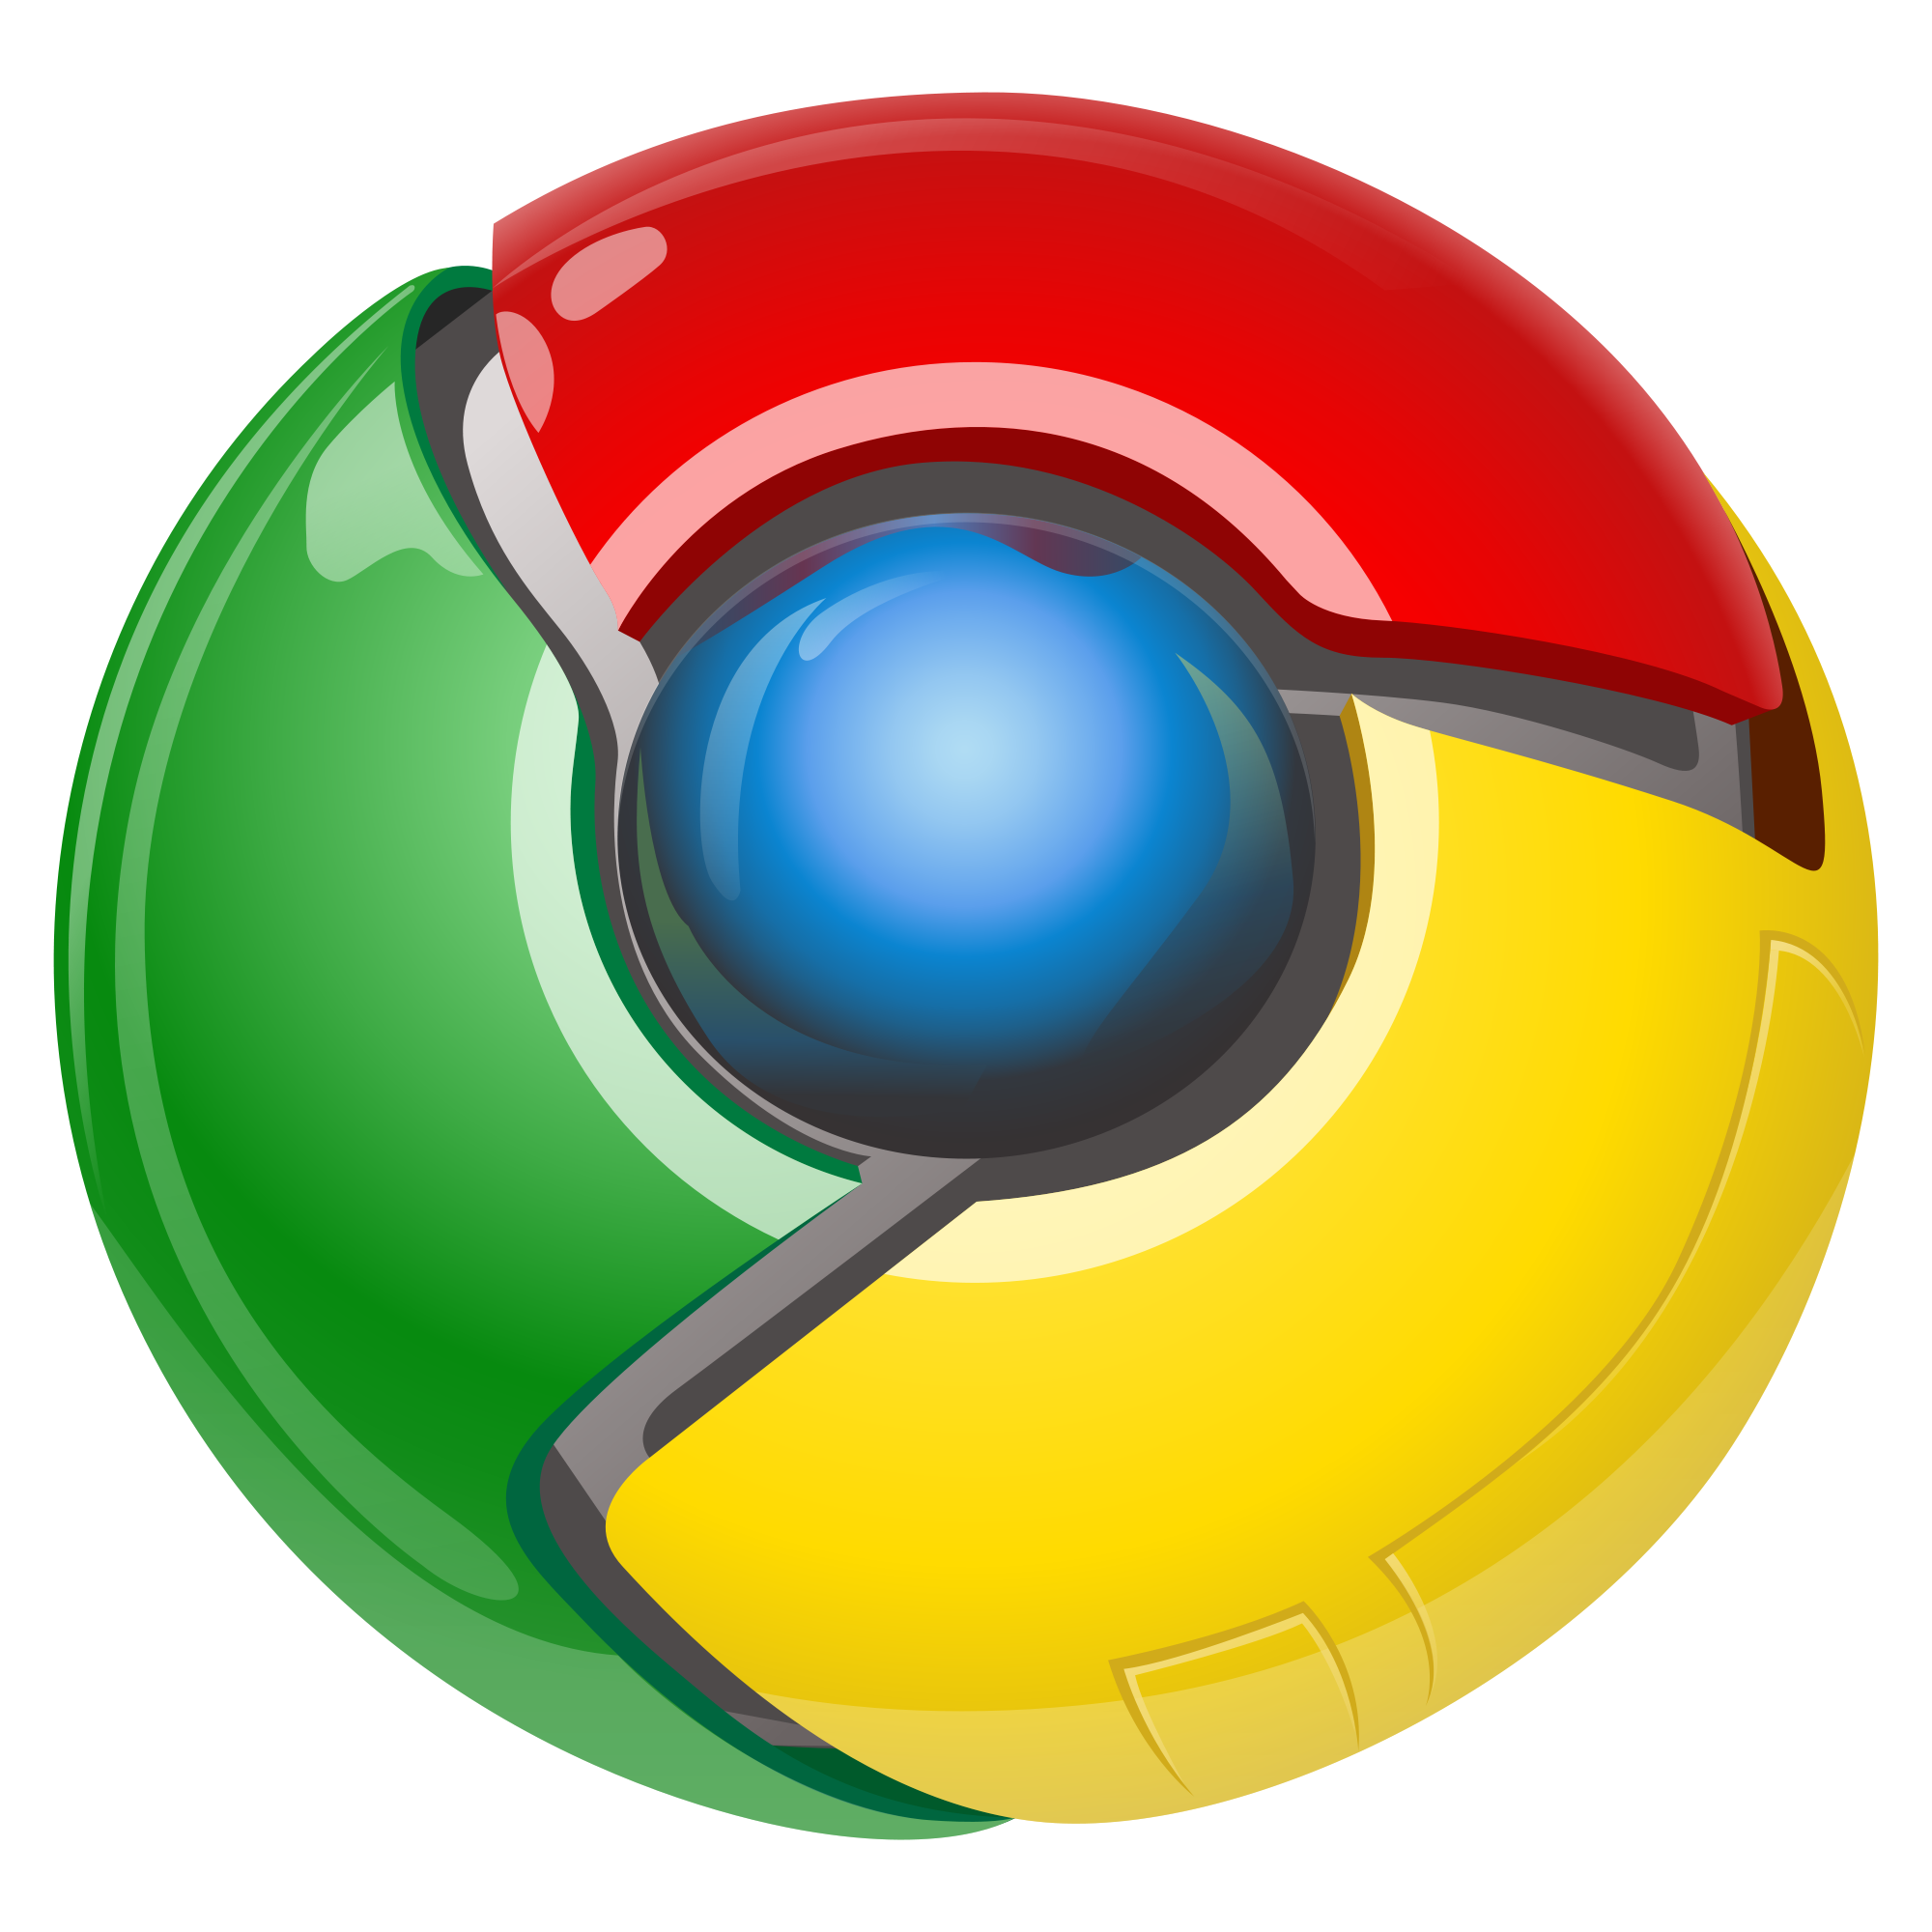 Google Chrome Logo PNG HD Quality